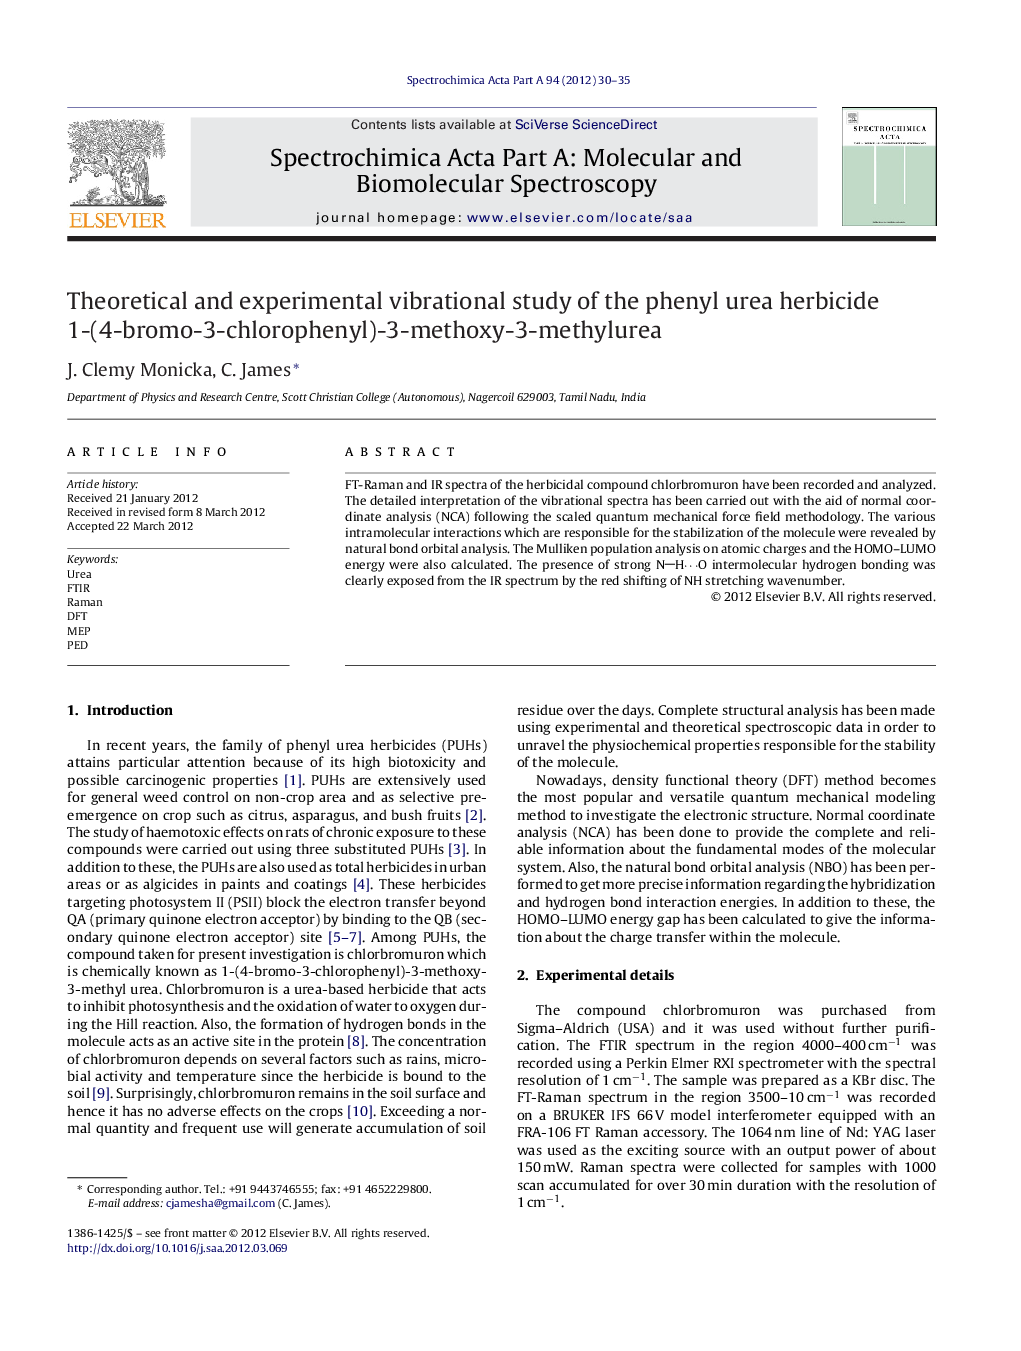 Theoretical and experimental vibrational study of the phenyl urea herbicide 1-(4-bromo-3-chlorophenyl)-3-methoxy-3-methylurea